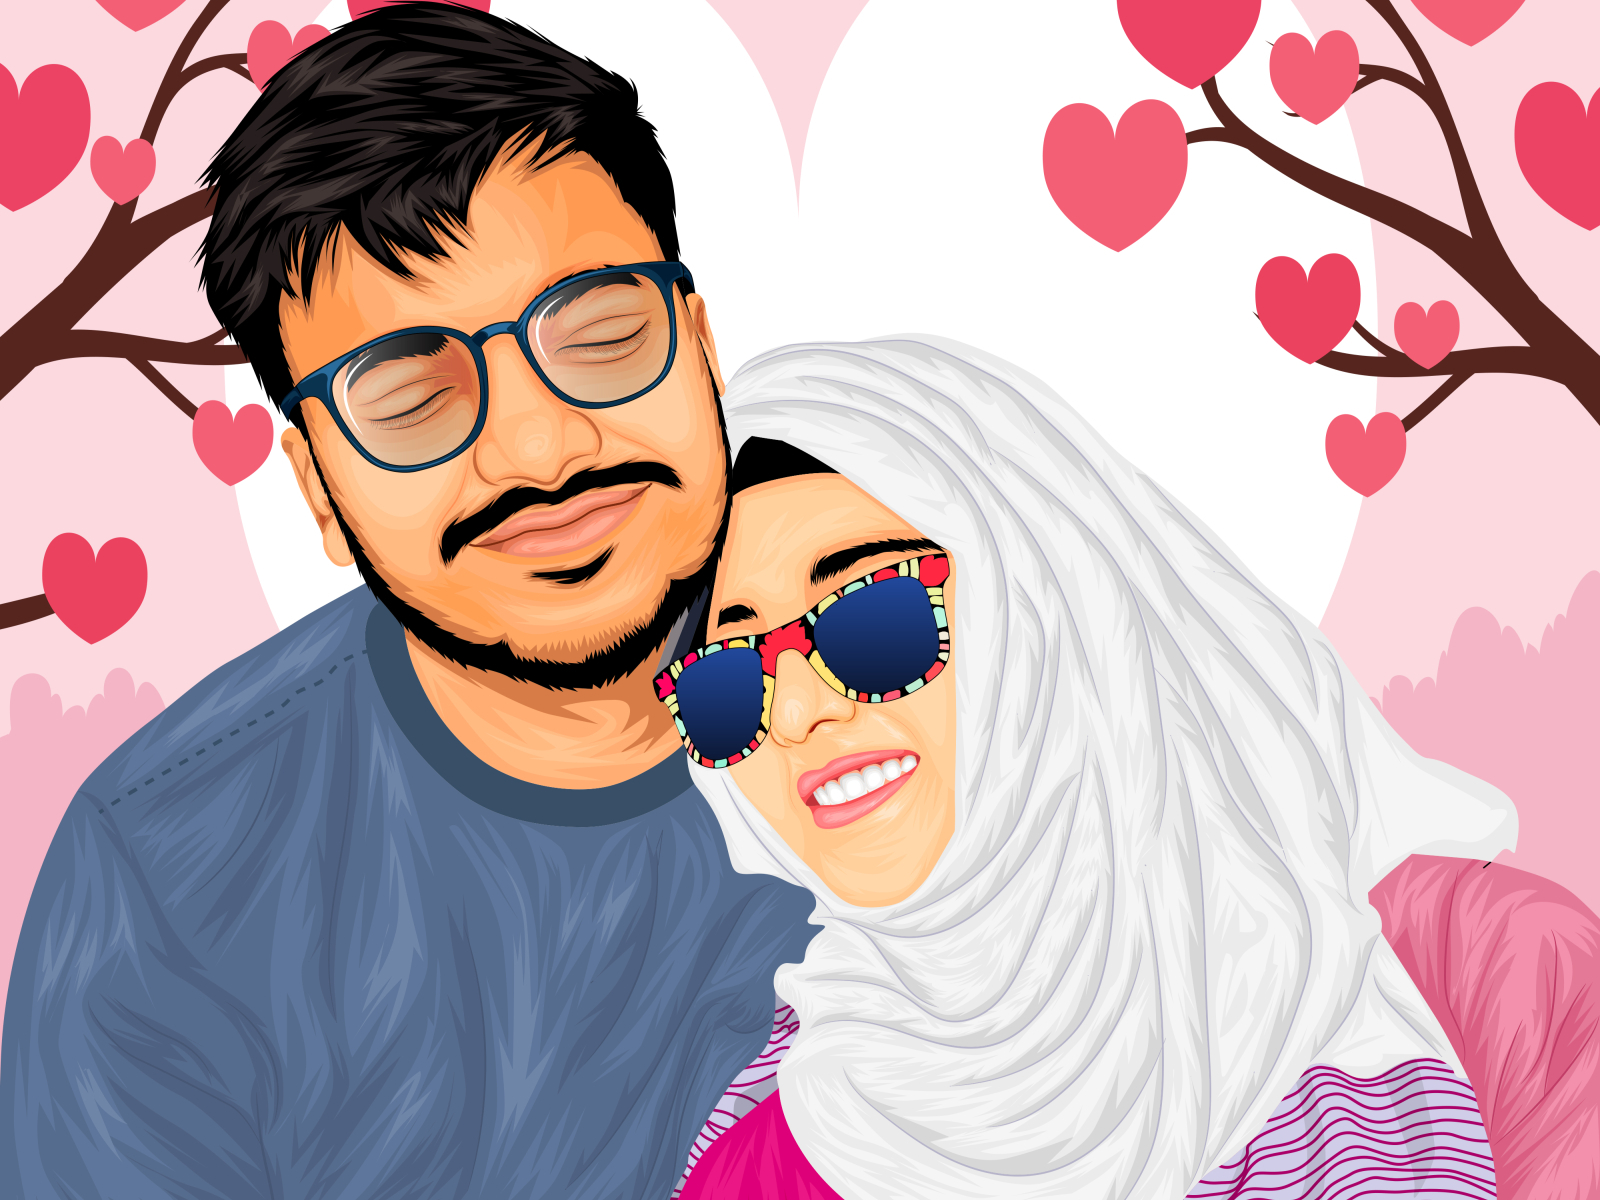 Cute Cartoon Couple Portrait by Redwanul Haque Ibrahim on Dribbble